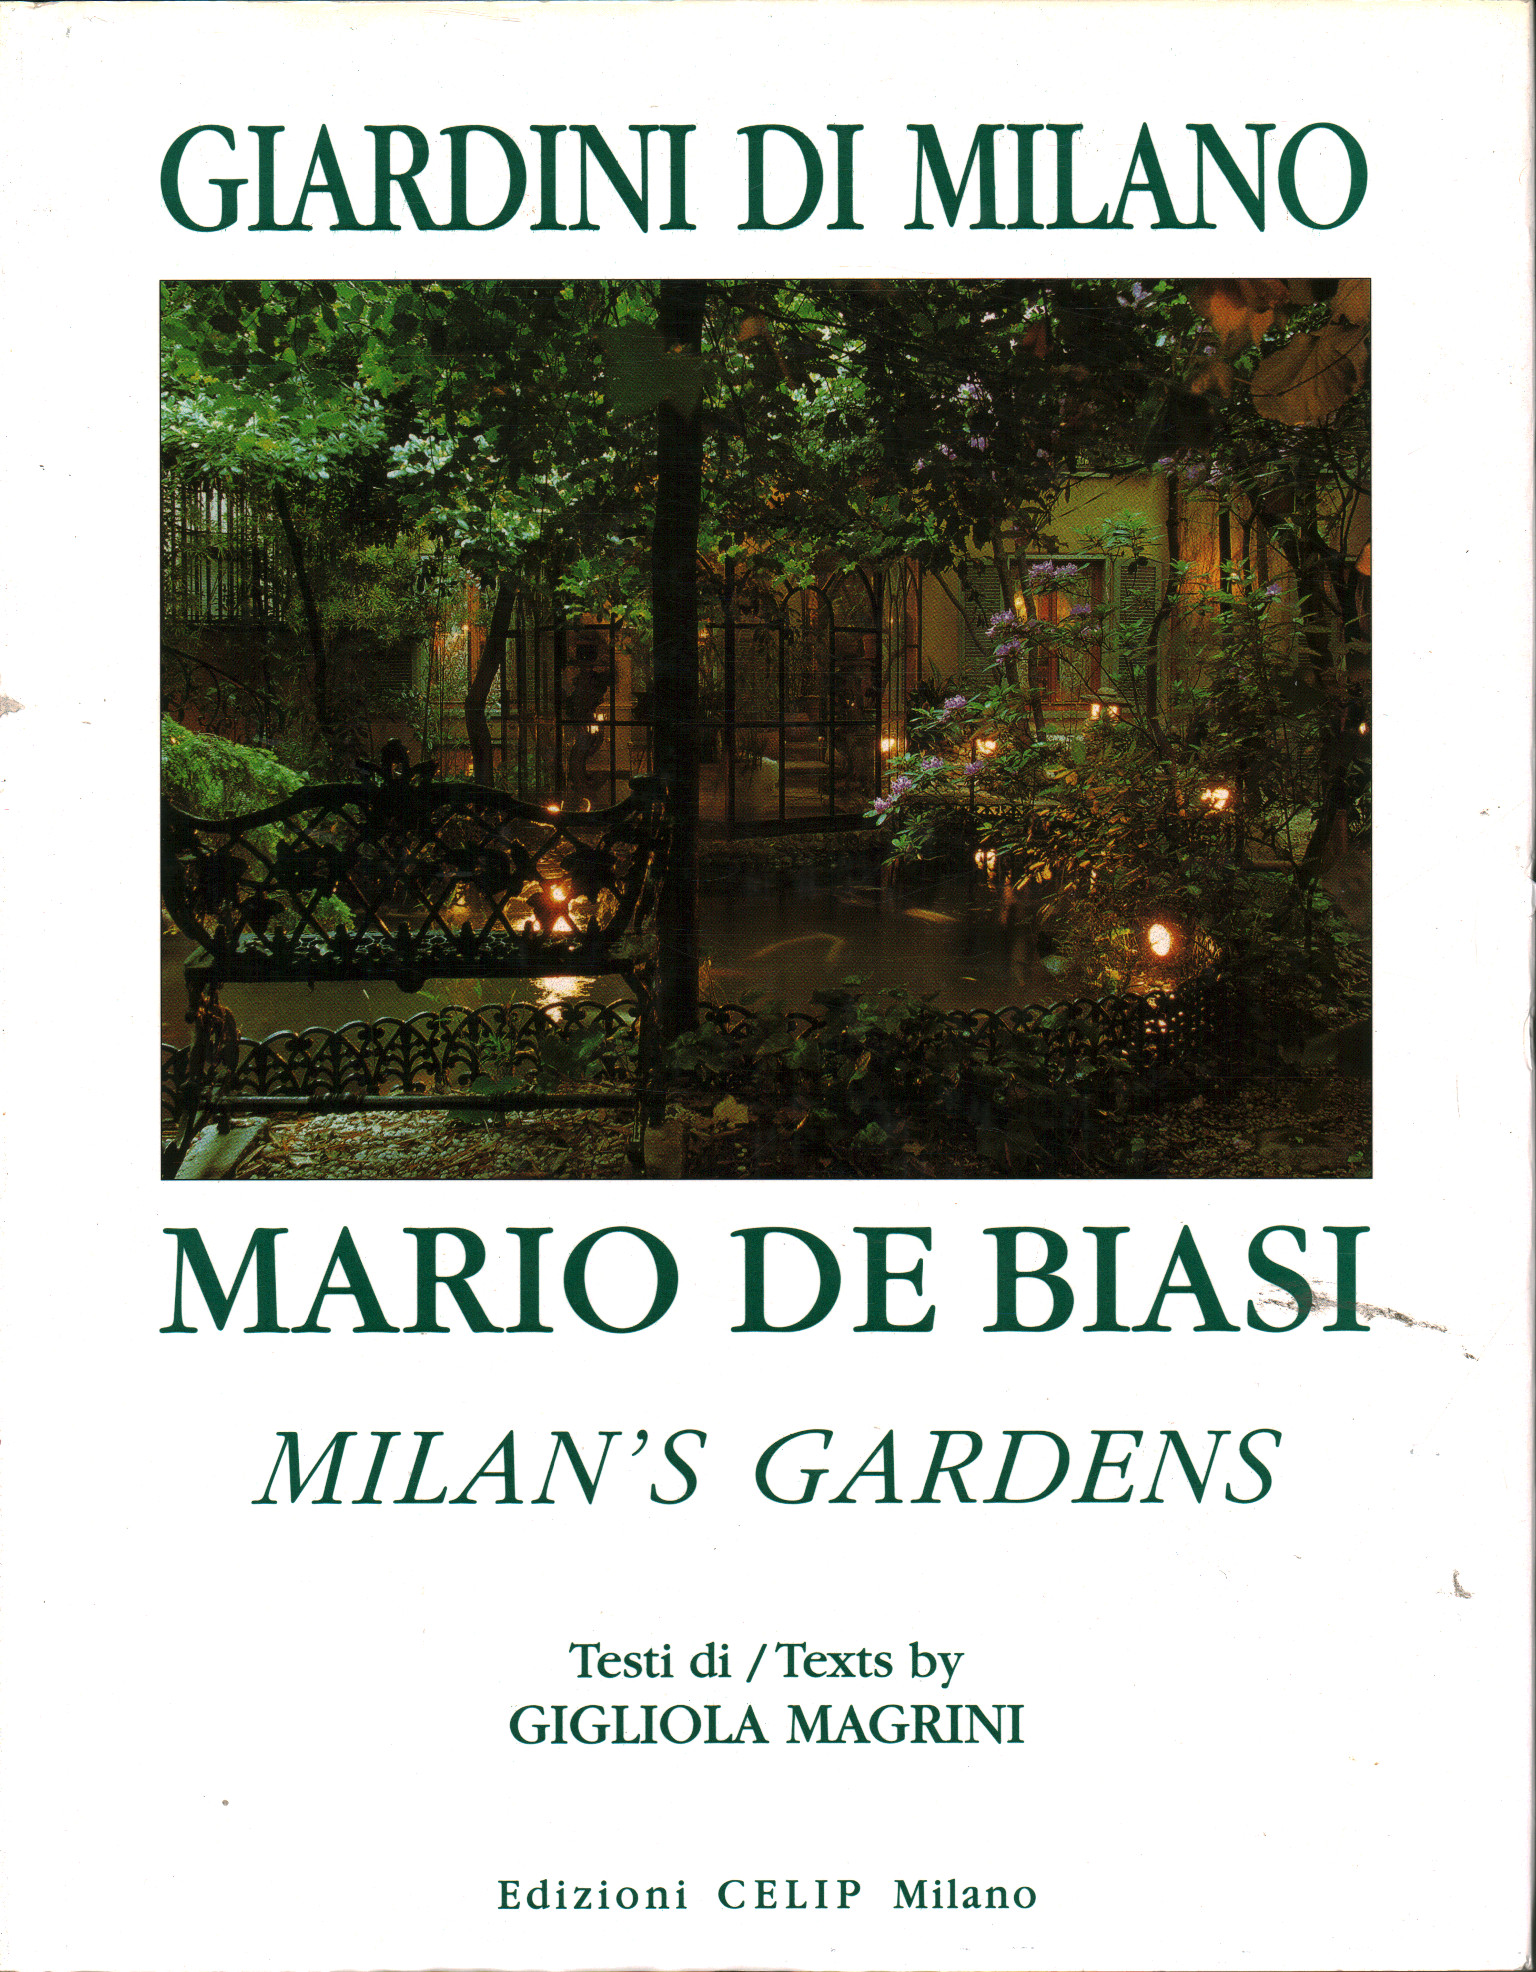 Giardini di Milano/Milan's gardens, Mario de Biasi